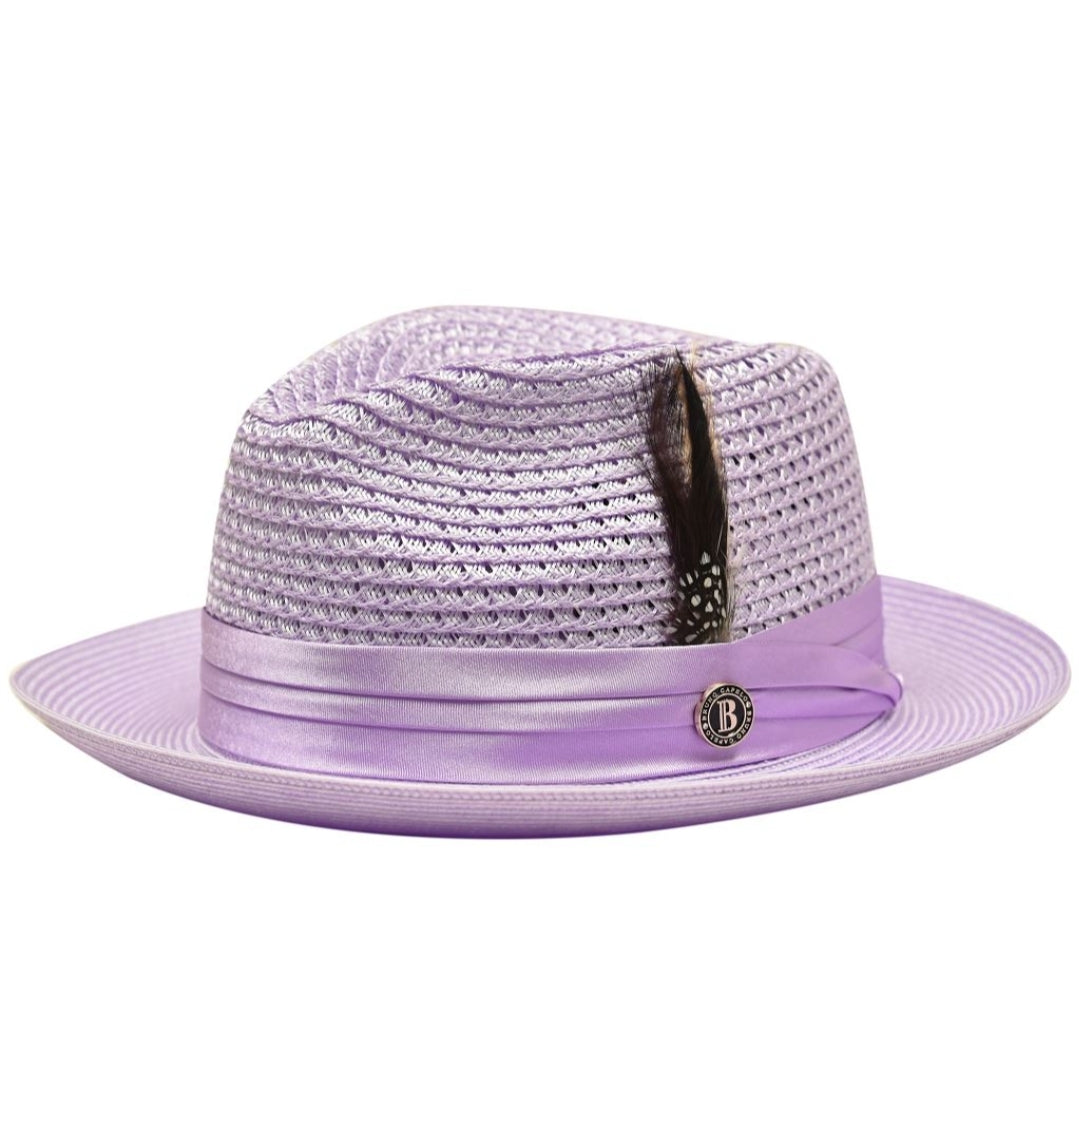 Bruno Capelo Fedora Straw Hat